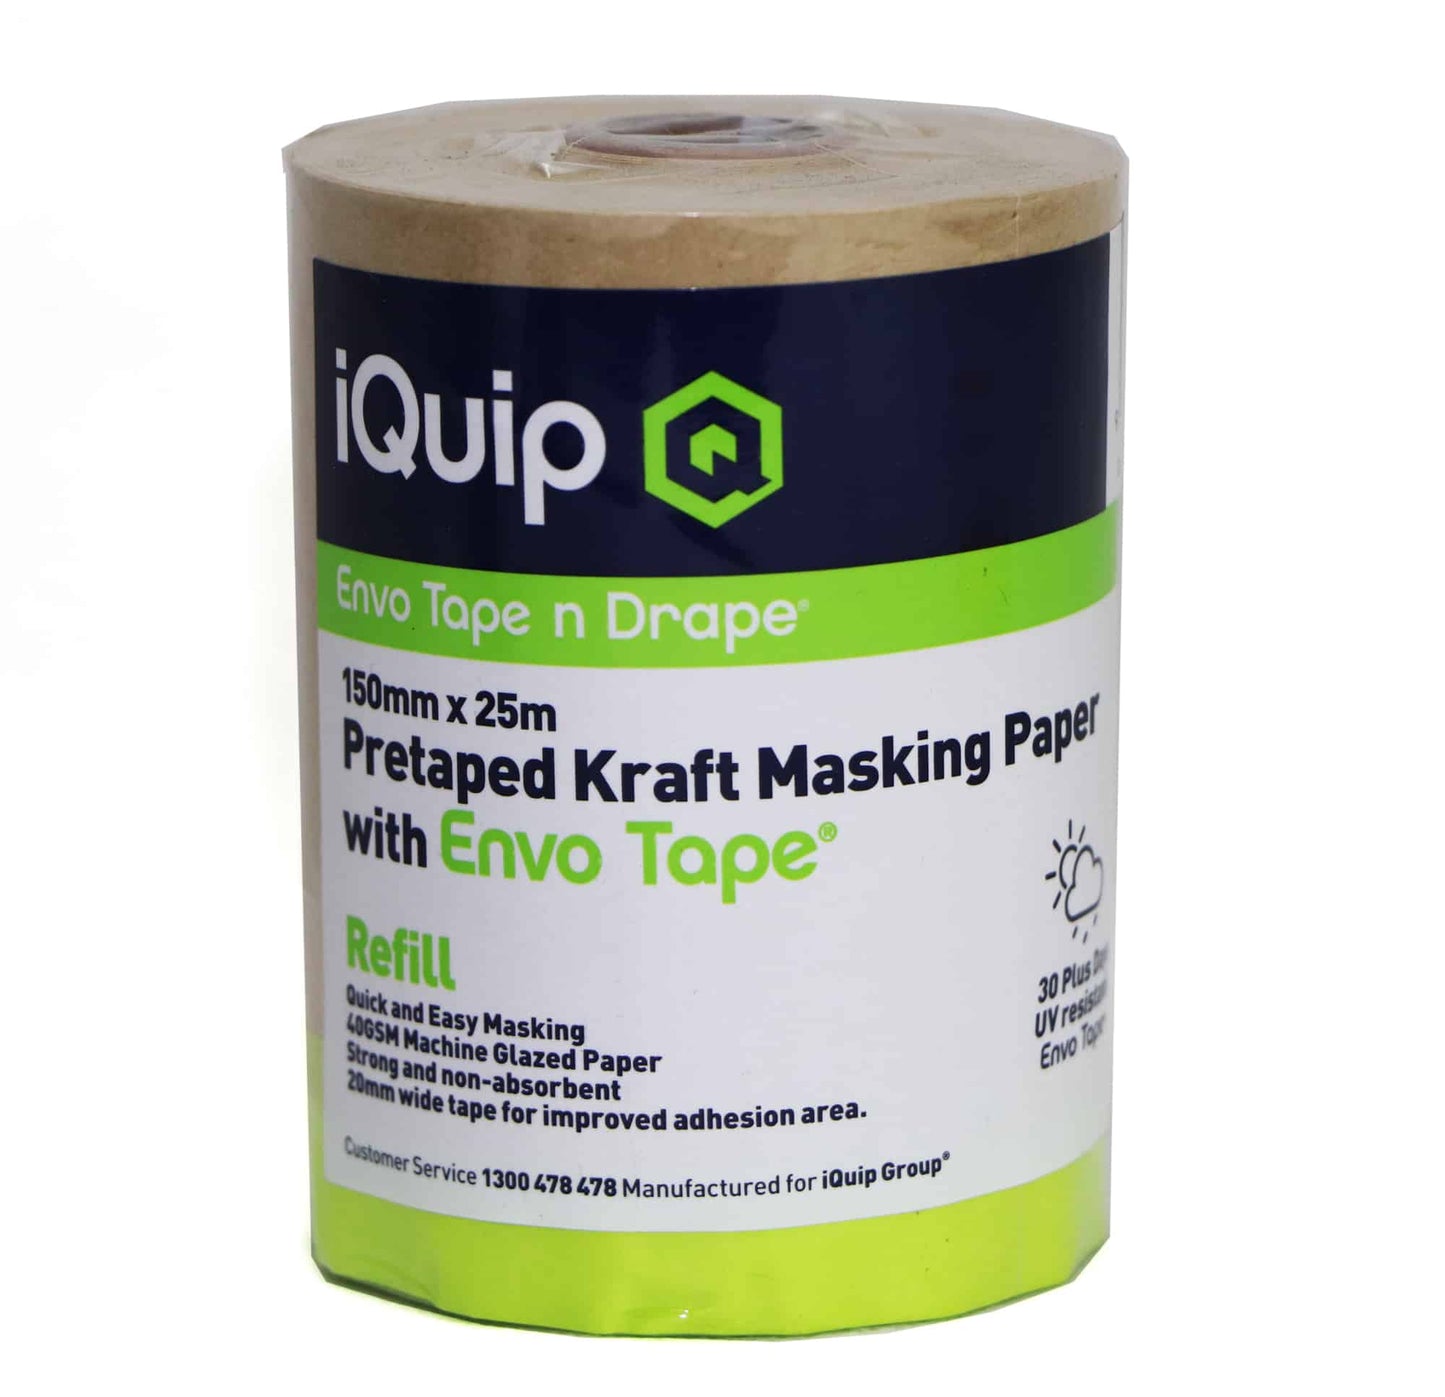 iQuip Pretaped Kraft Masking Paper REFILL